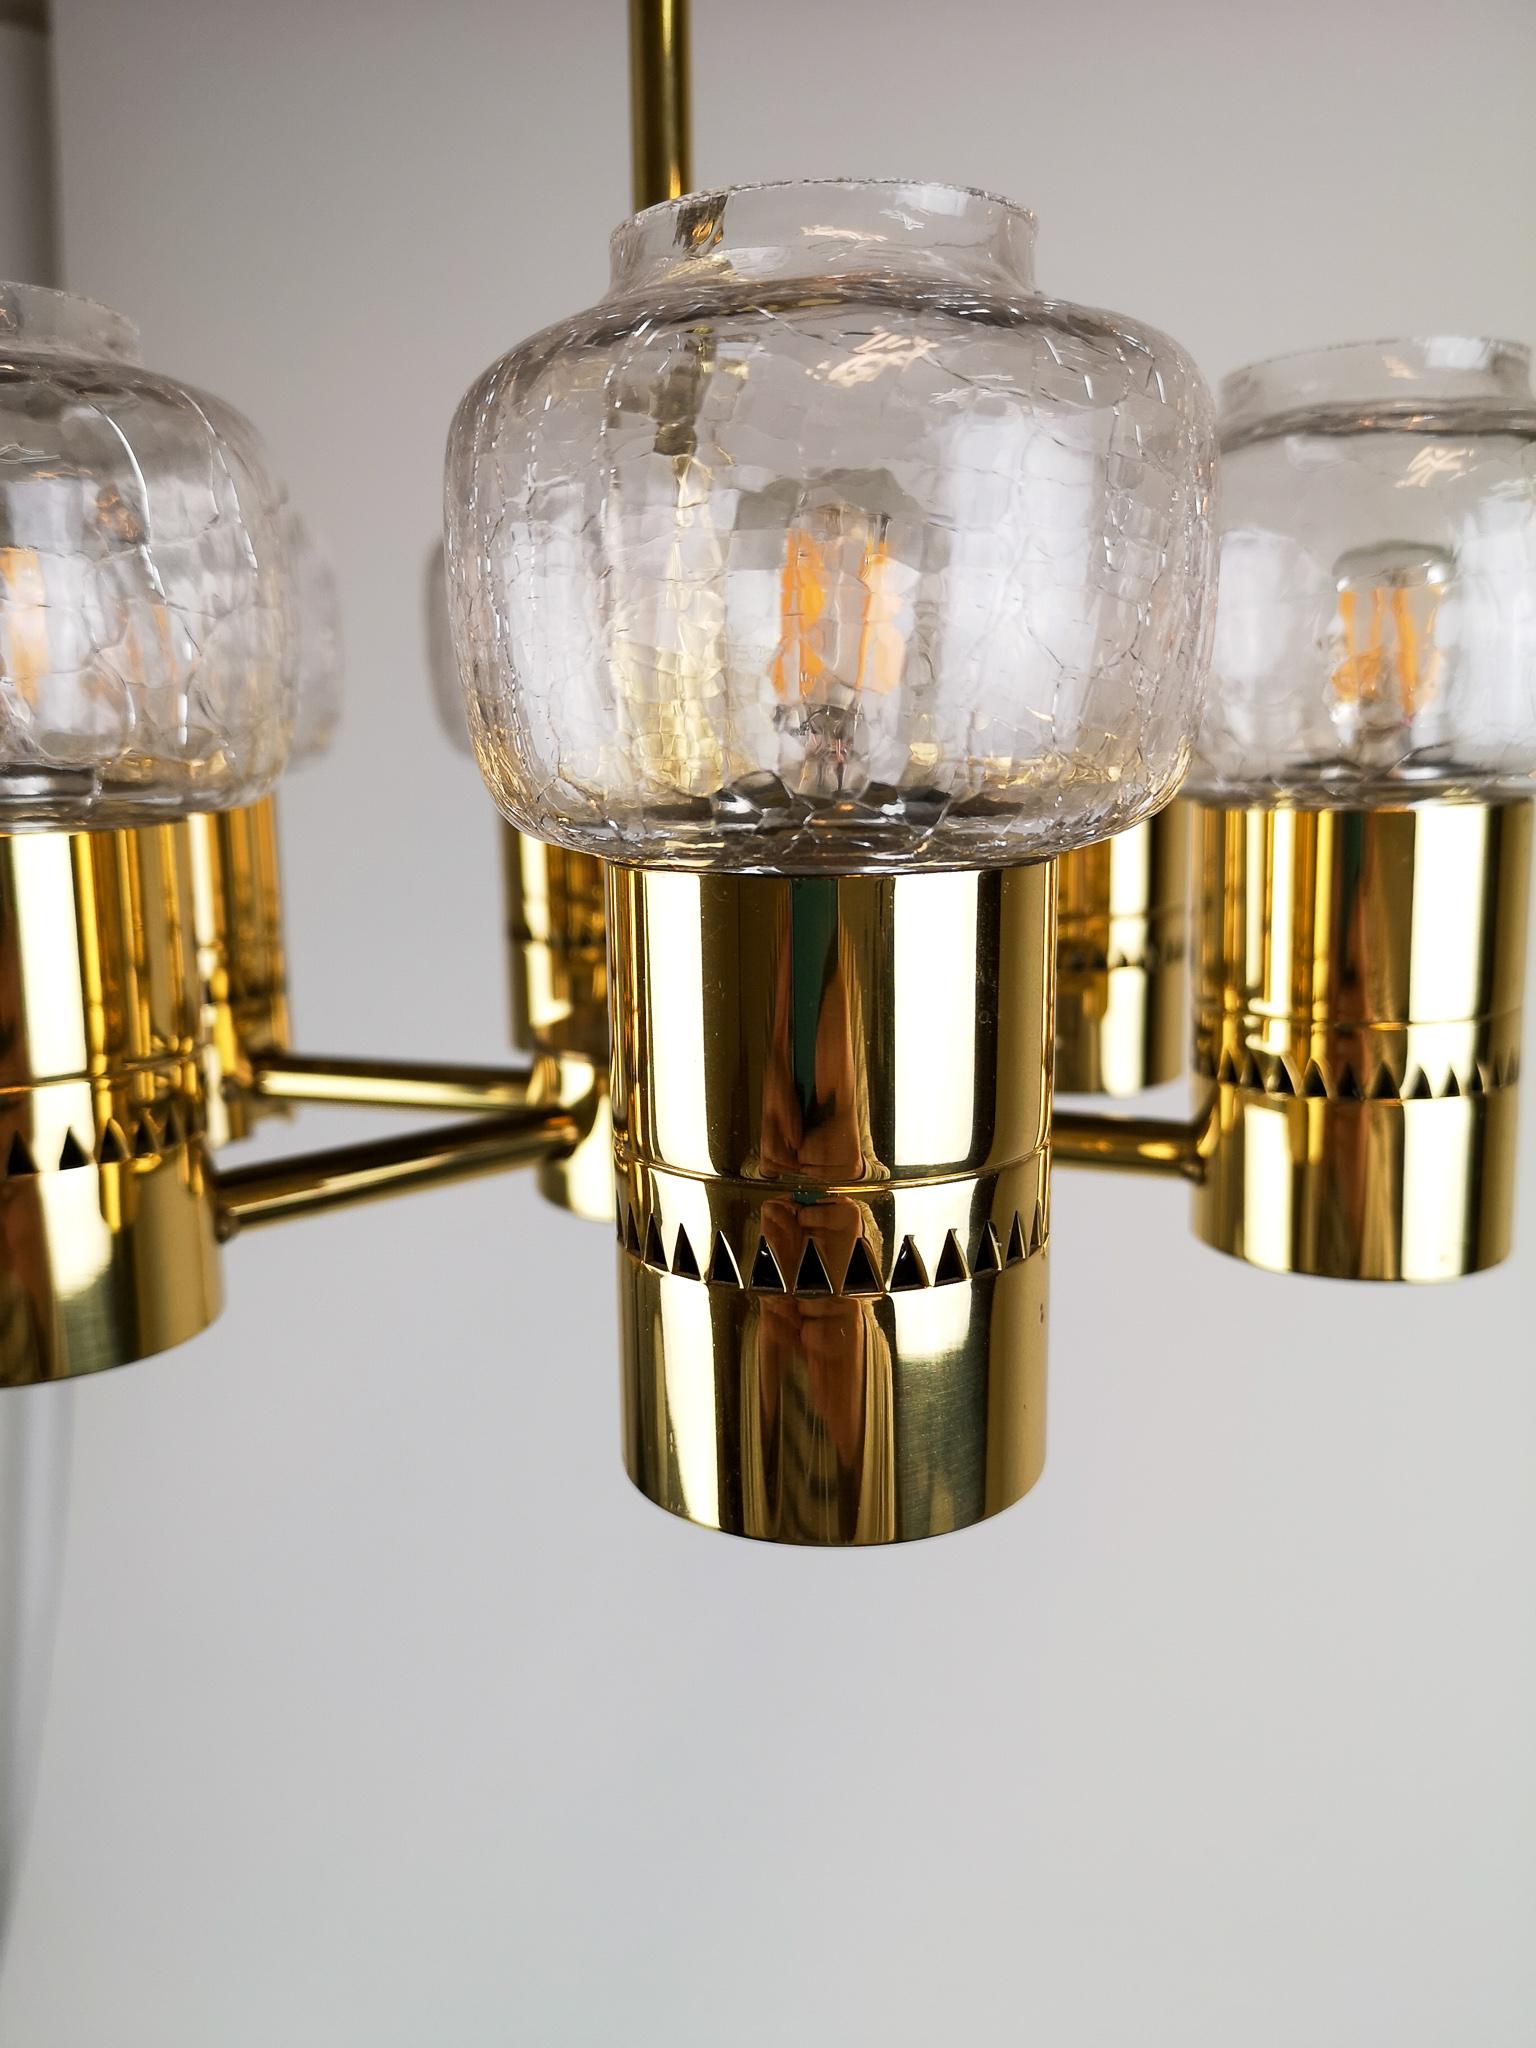 Swedish Midcentury Hans-Agne Jakobsson Lamingo T325 Ceiling Lamp, Sweden, 1950s